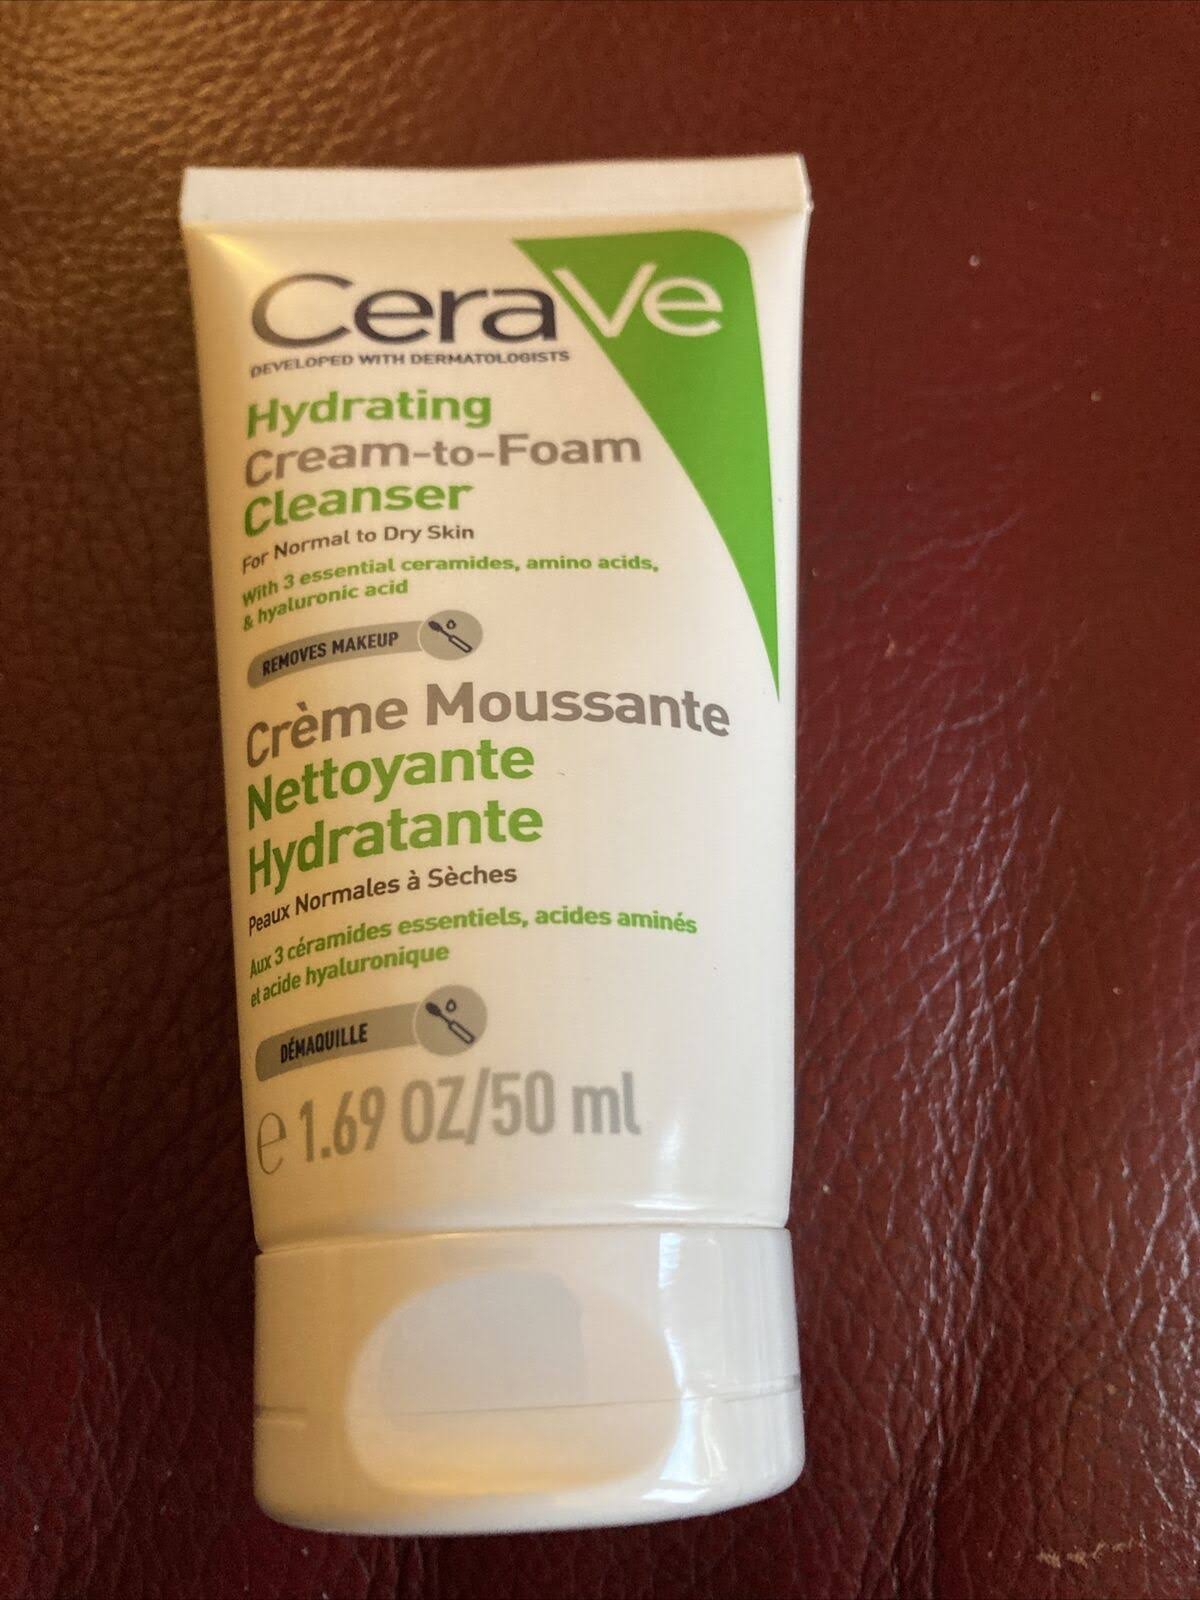 CeraVe Hydrating Cream-to-Foam Cleanser 50ml